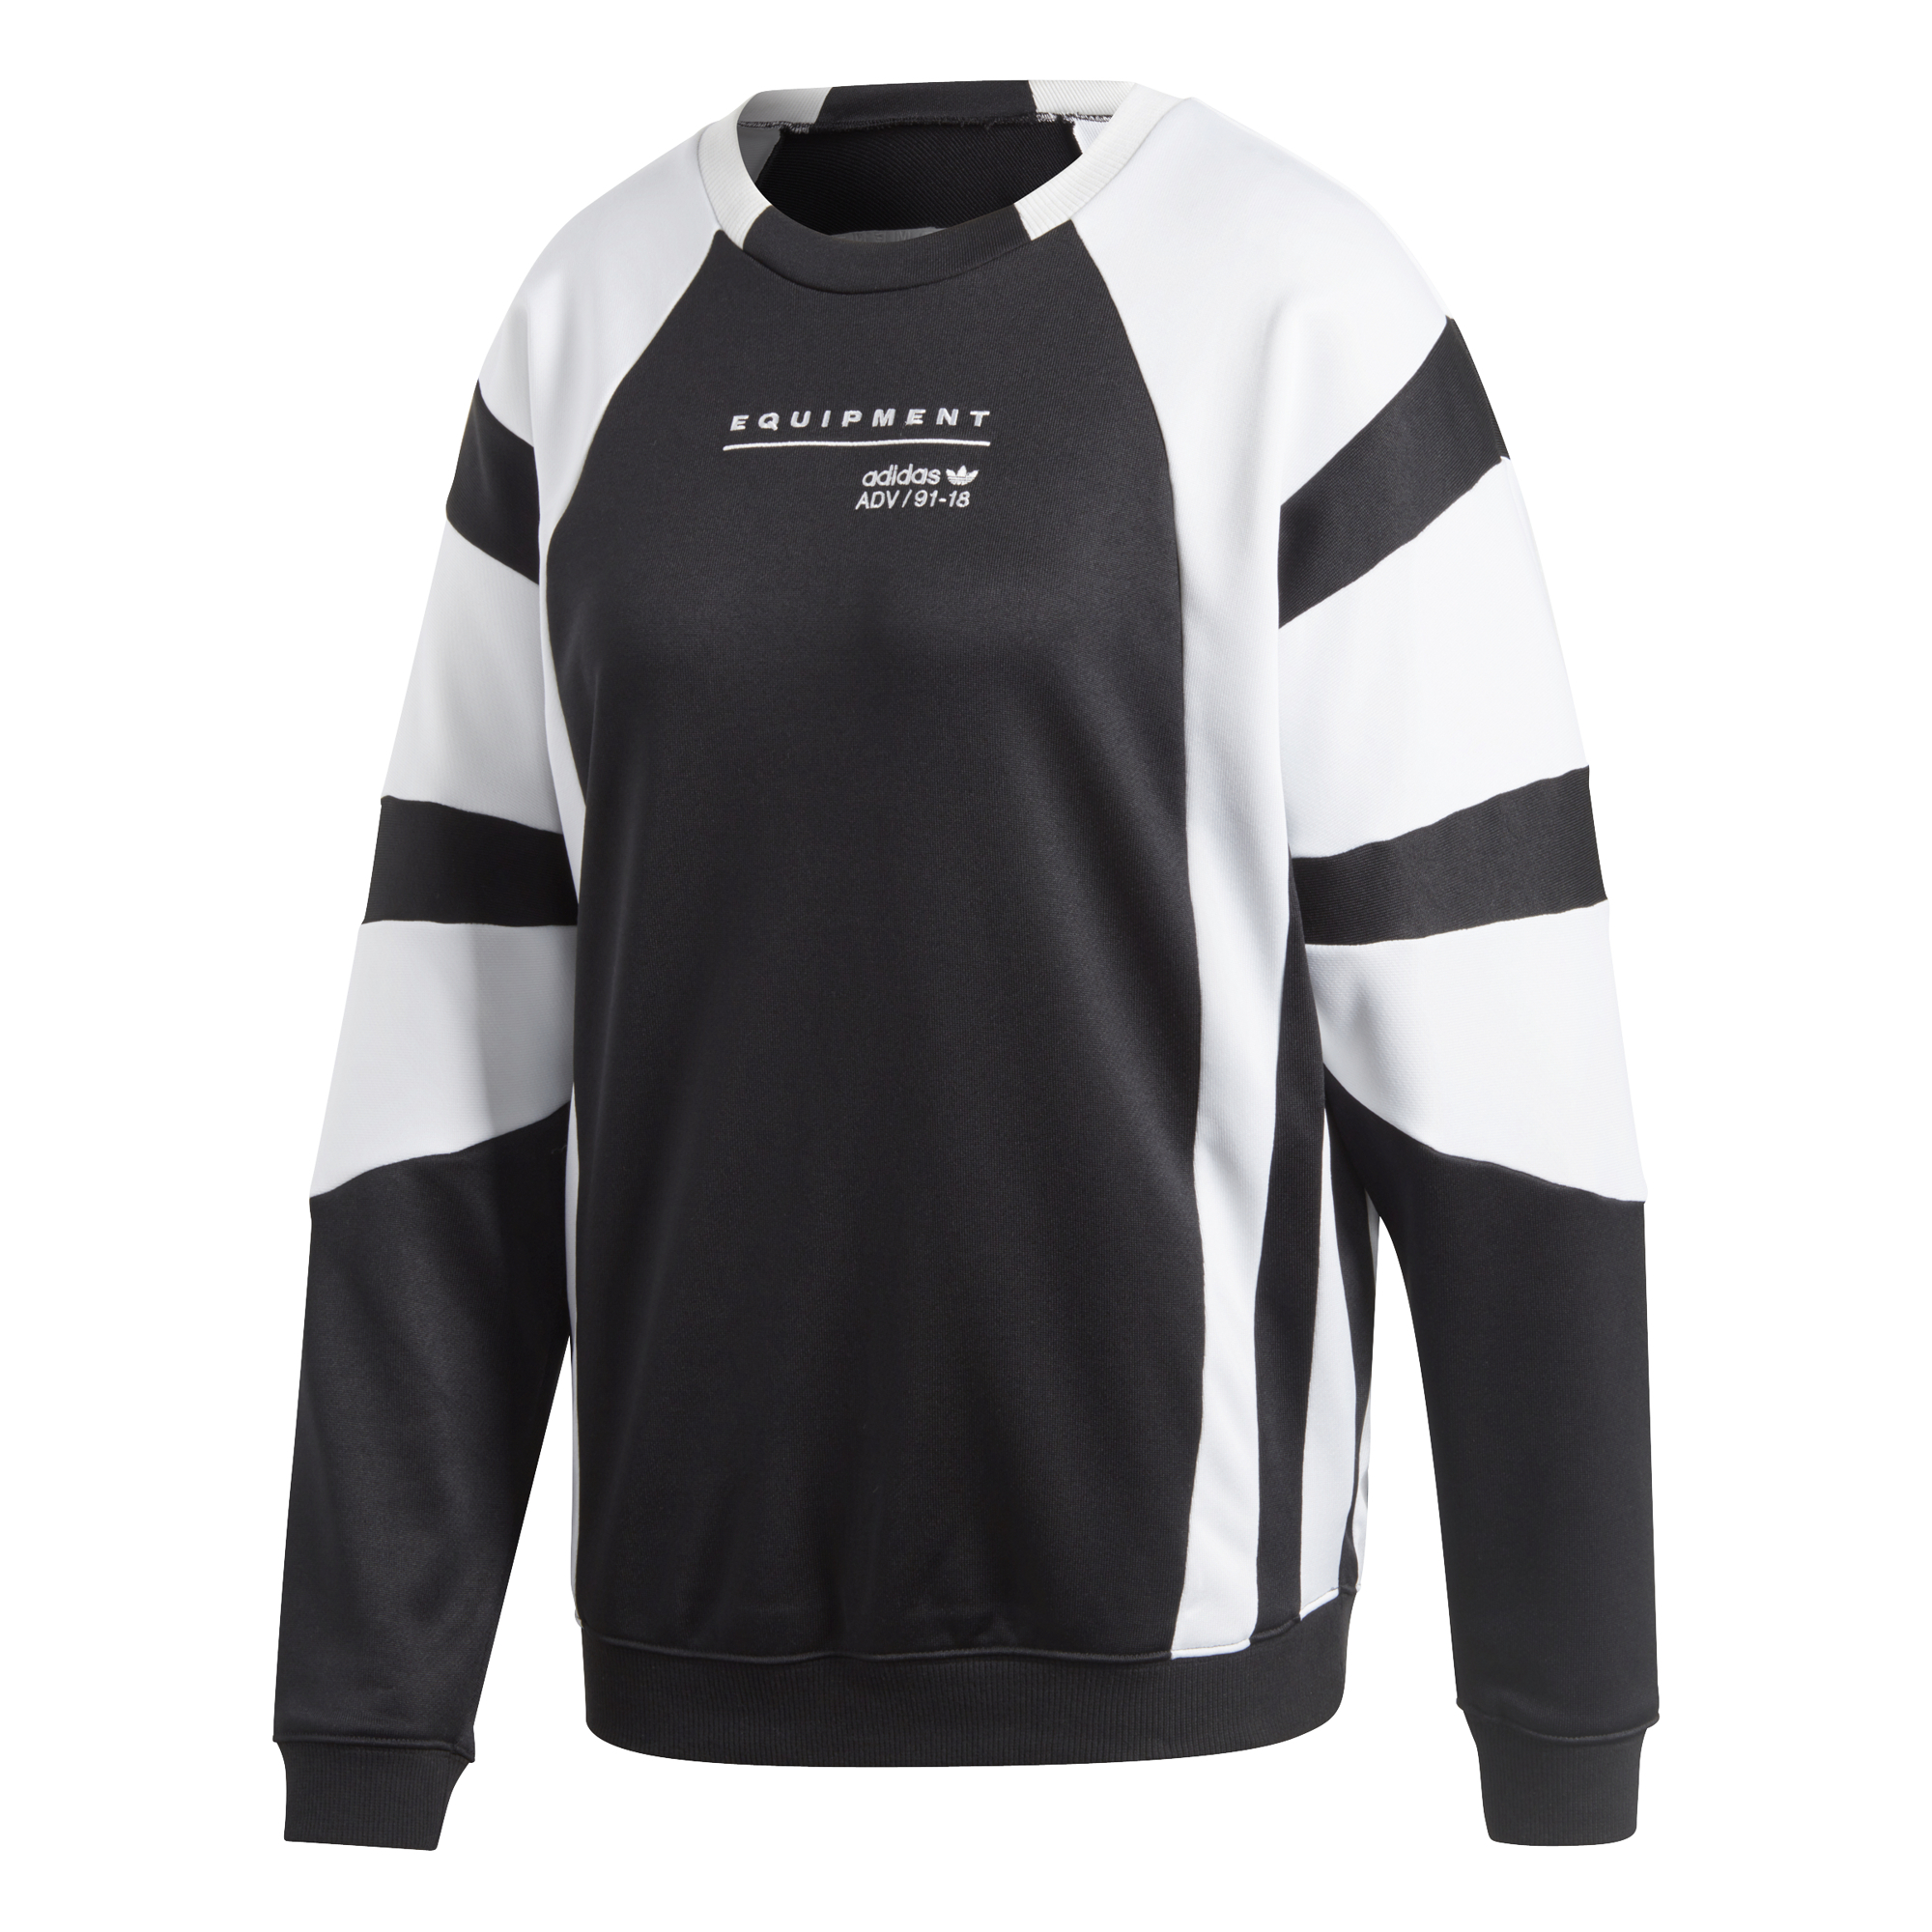 Adidas Equipment Sweatshirt - manelsanchez.com